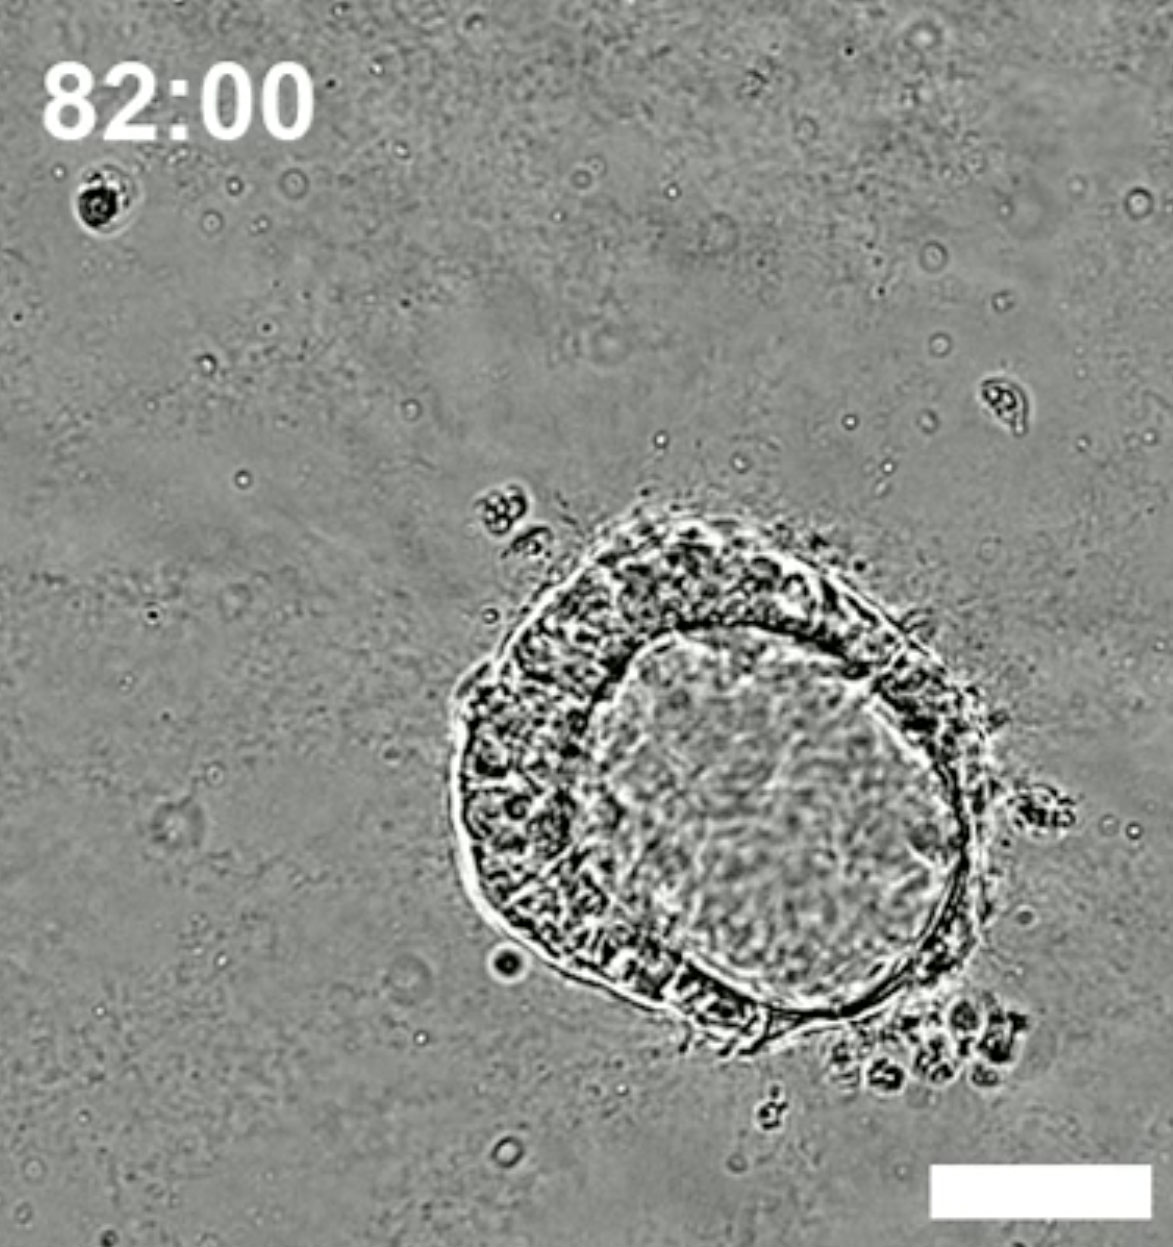 Stem cells self-organize in ways that mimic a human embryo.